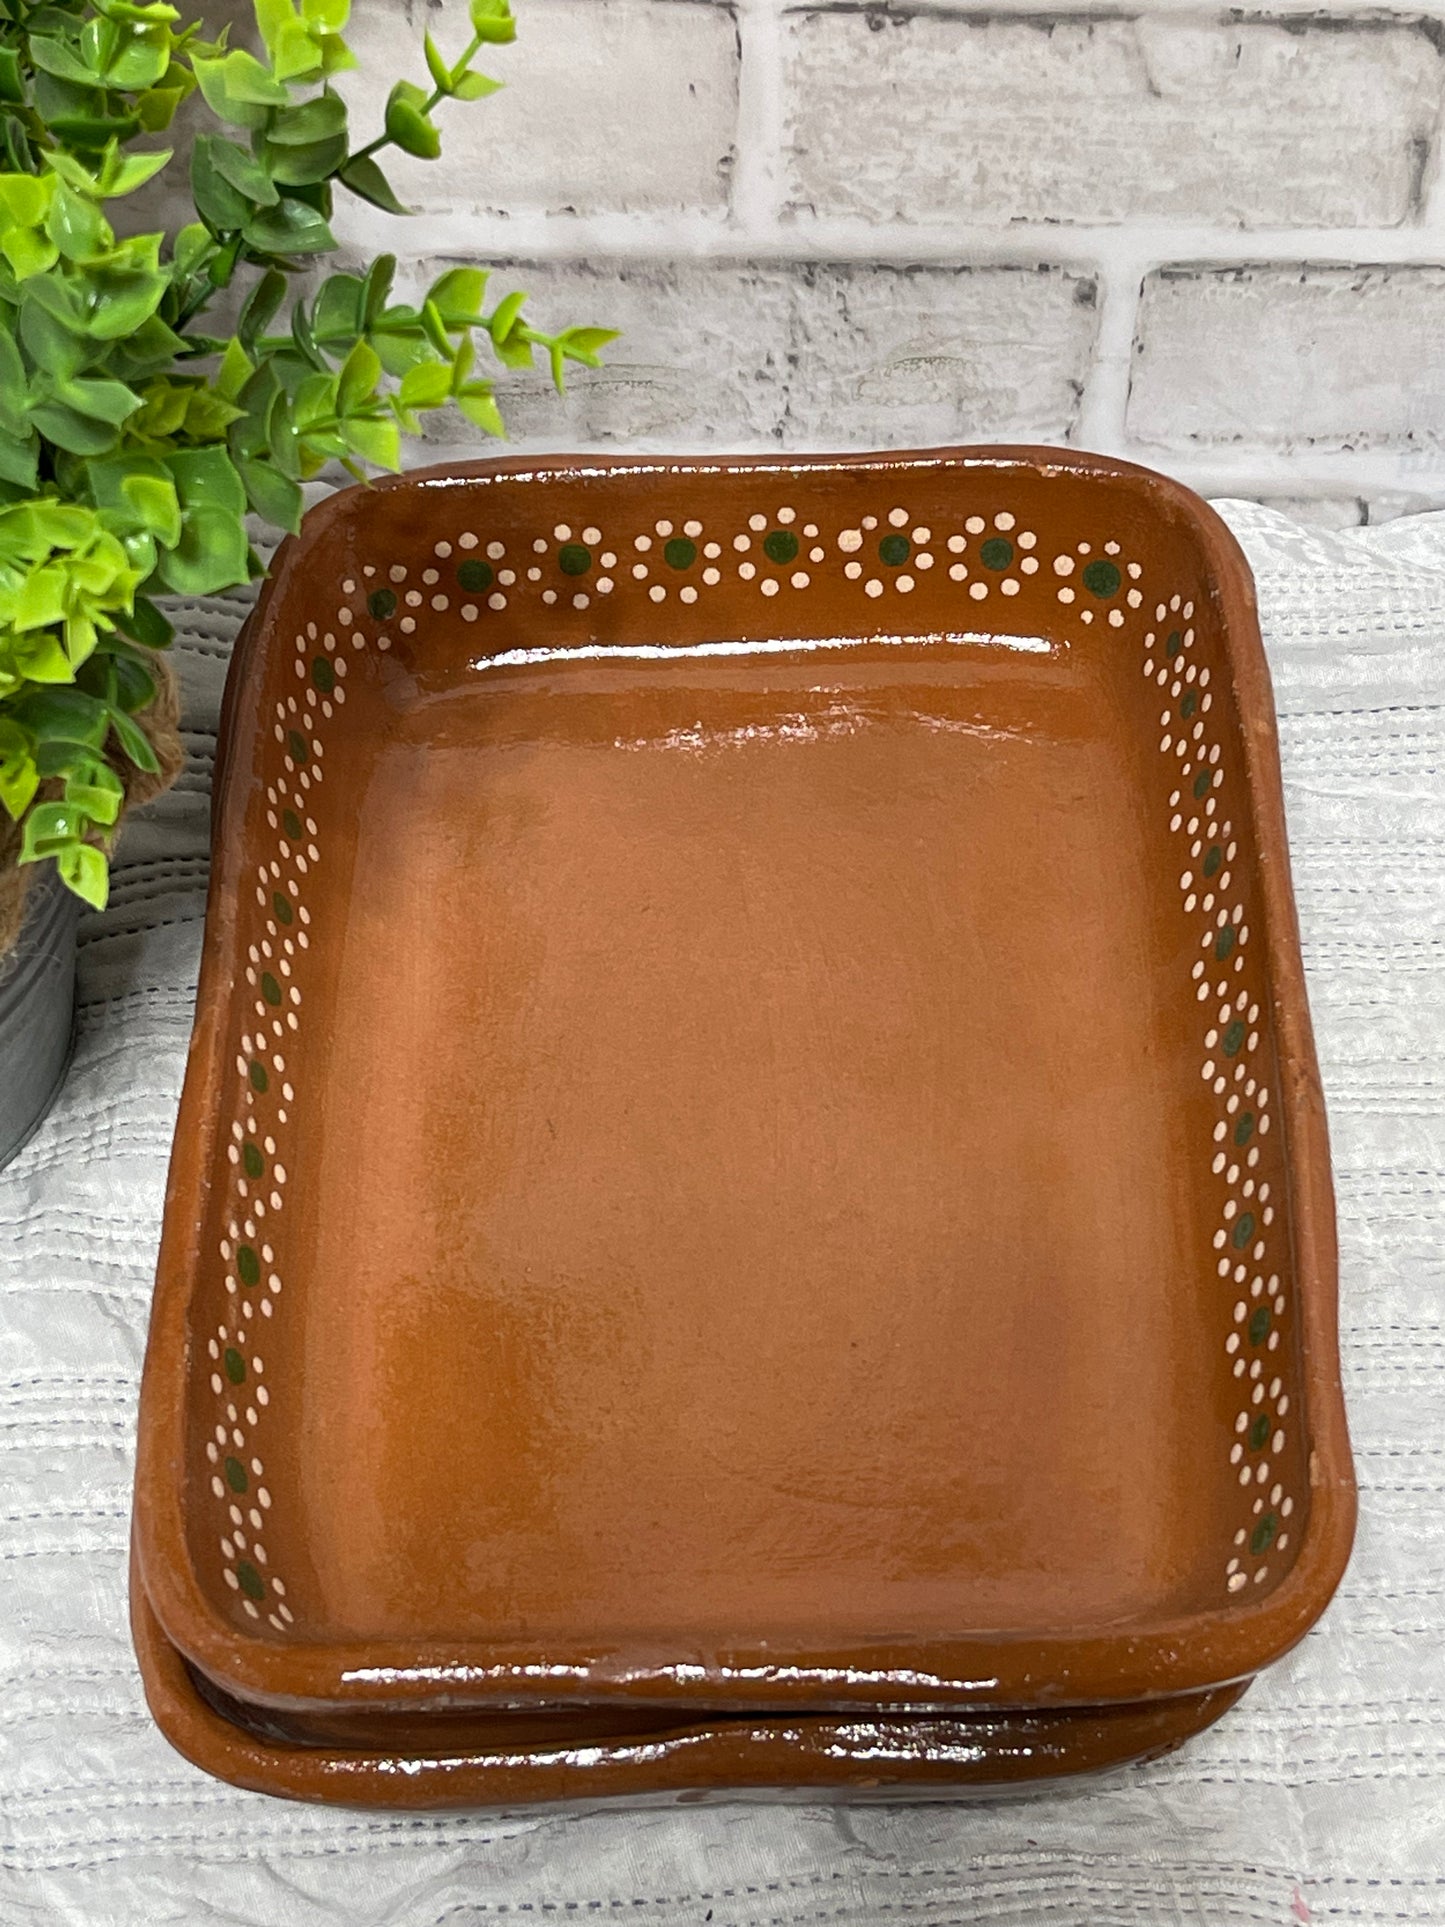 Handmade Mexican rustic clay/ceramic rectangular deep plate/ Plato de barro taquero rectangular